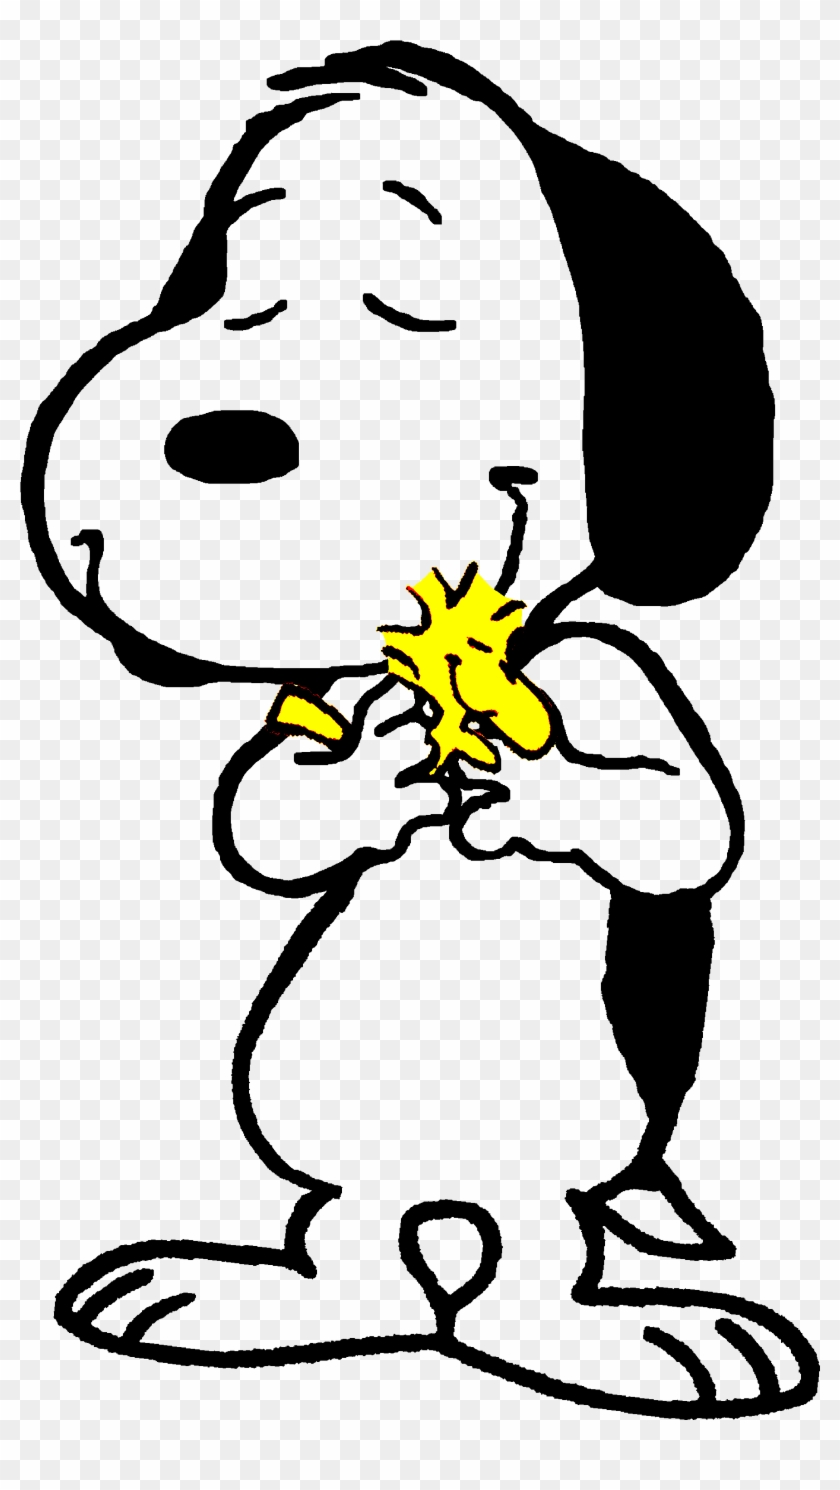 Peanuts Snoopy - Woodstock #349516